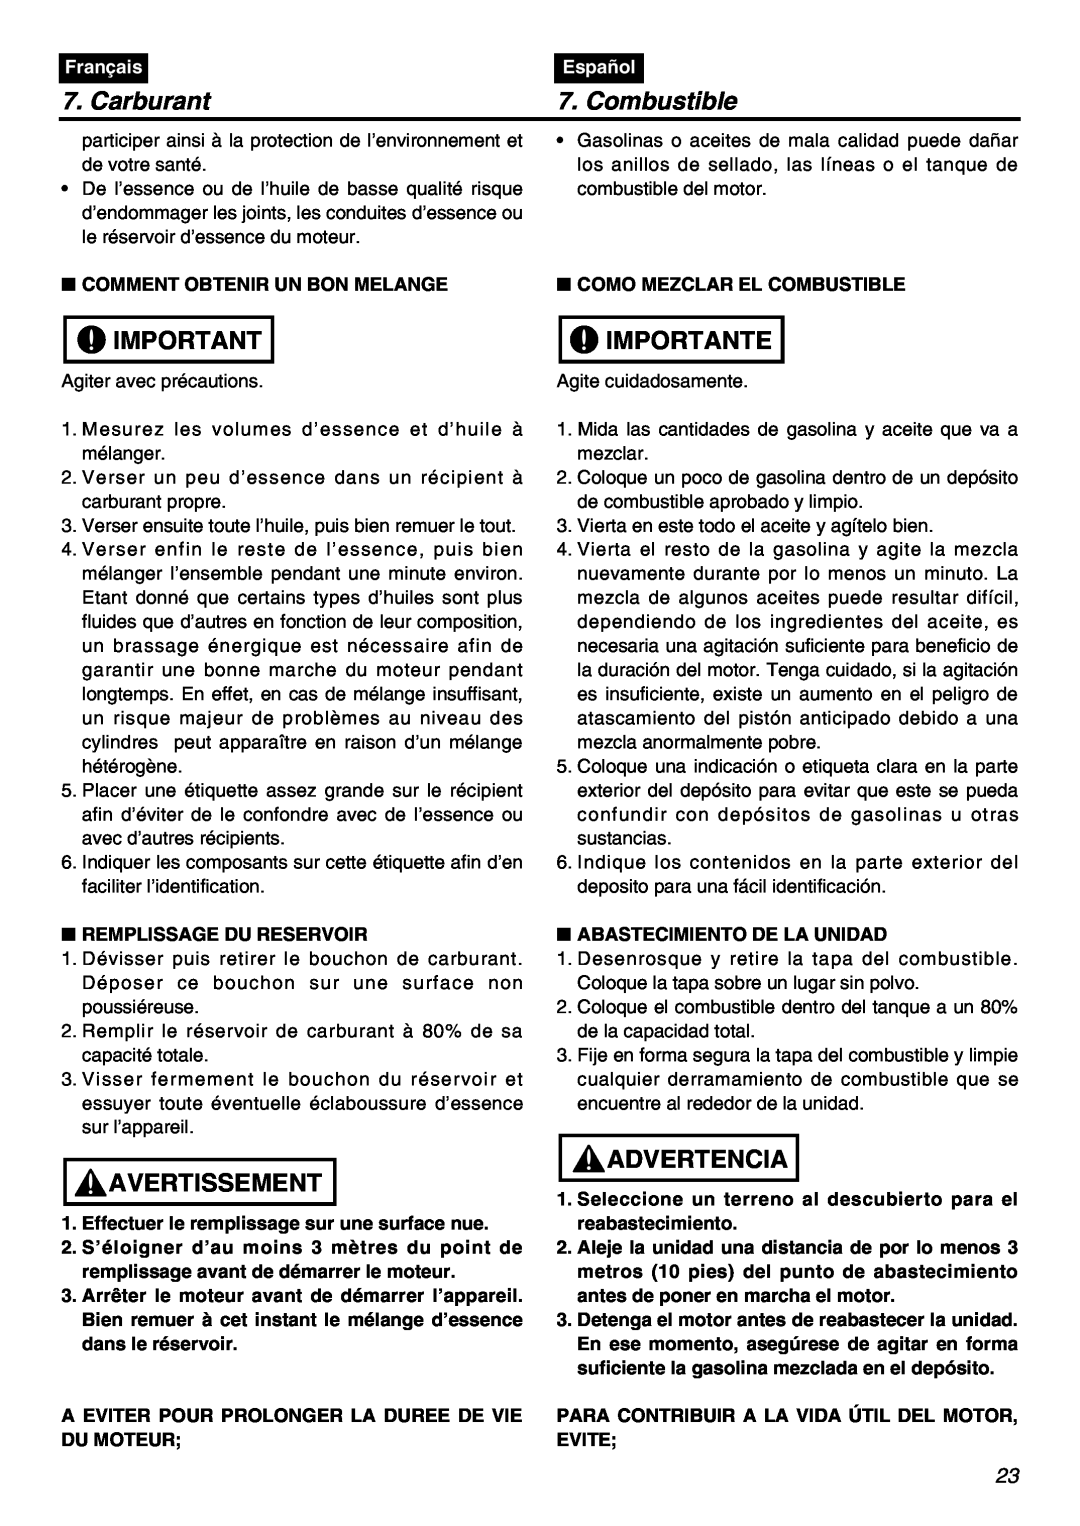 Zenoah BT250 manual Carburant, Combustible, Importante, Avertissement, Advertencia, Français, Español 